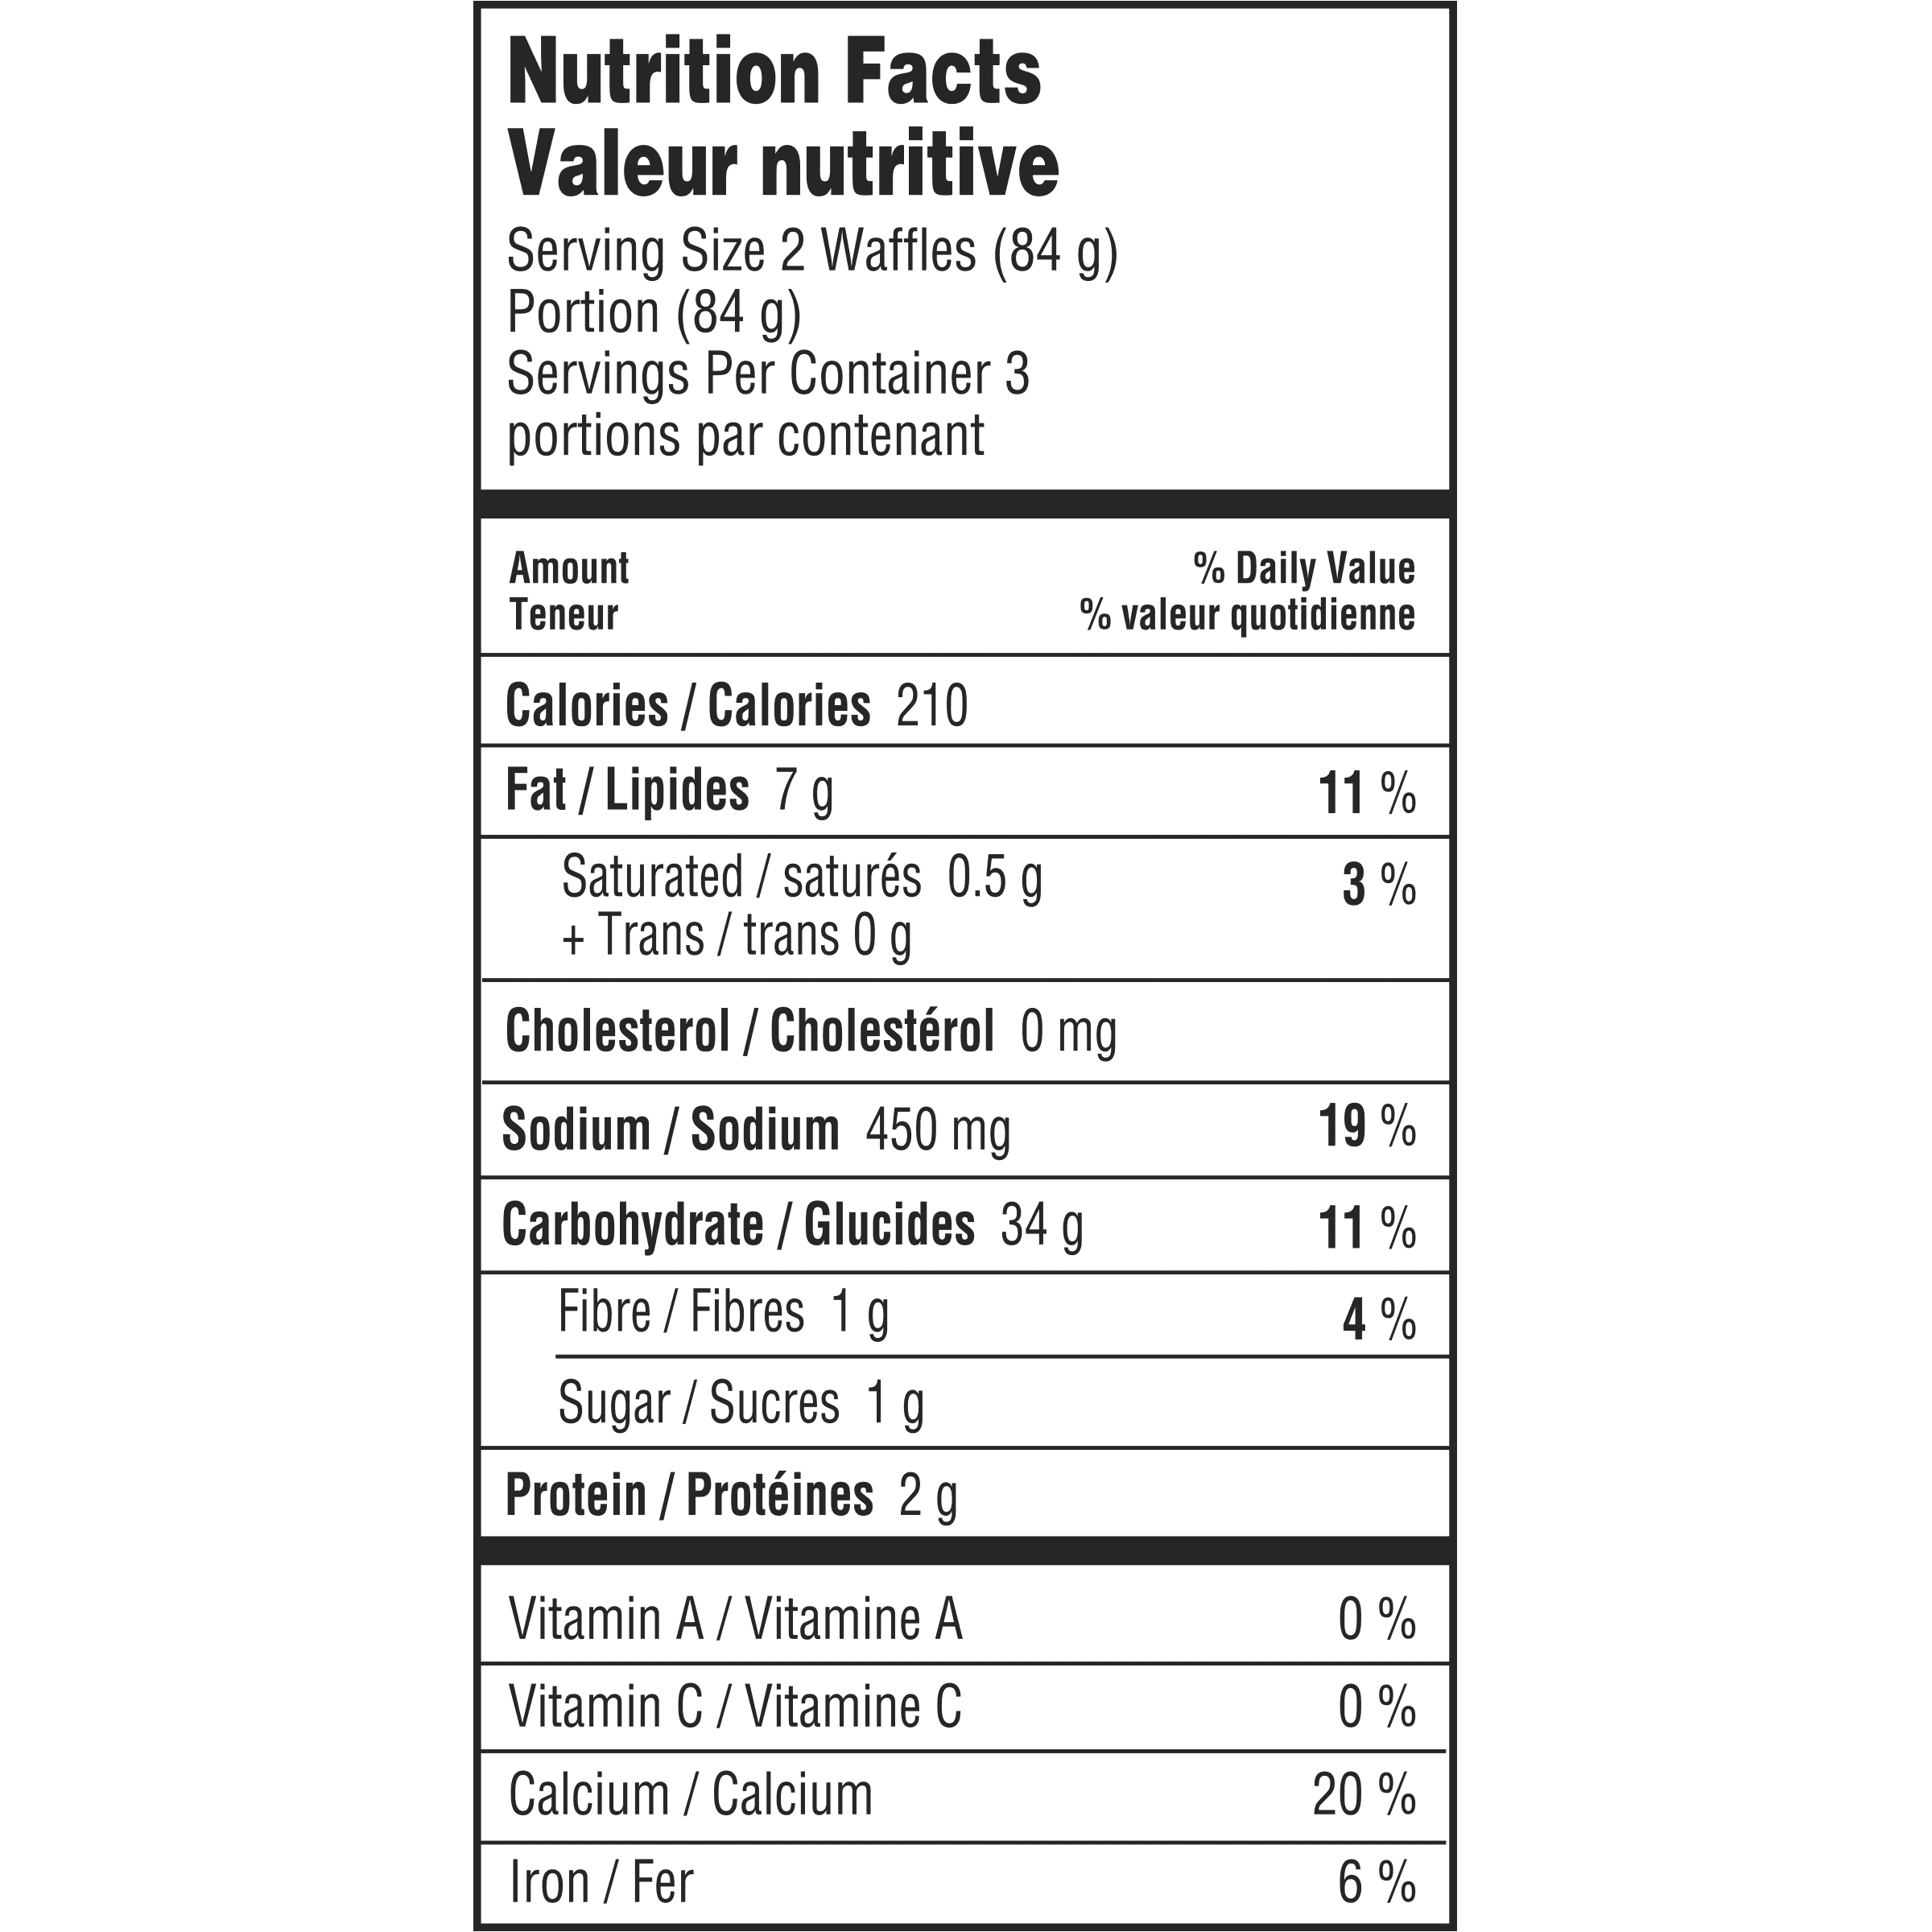 van's gluten free waffles nutrition facts